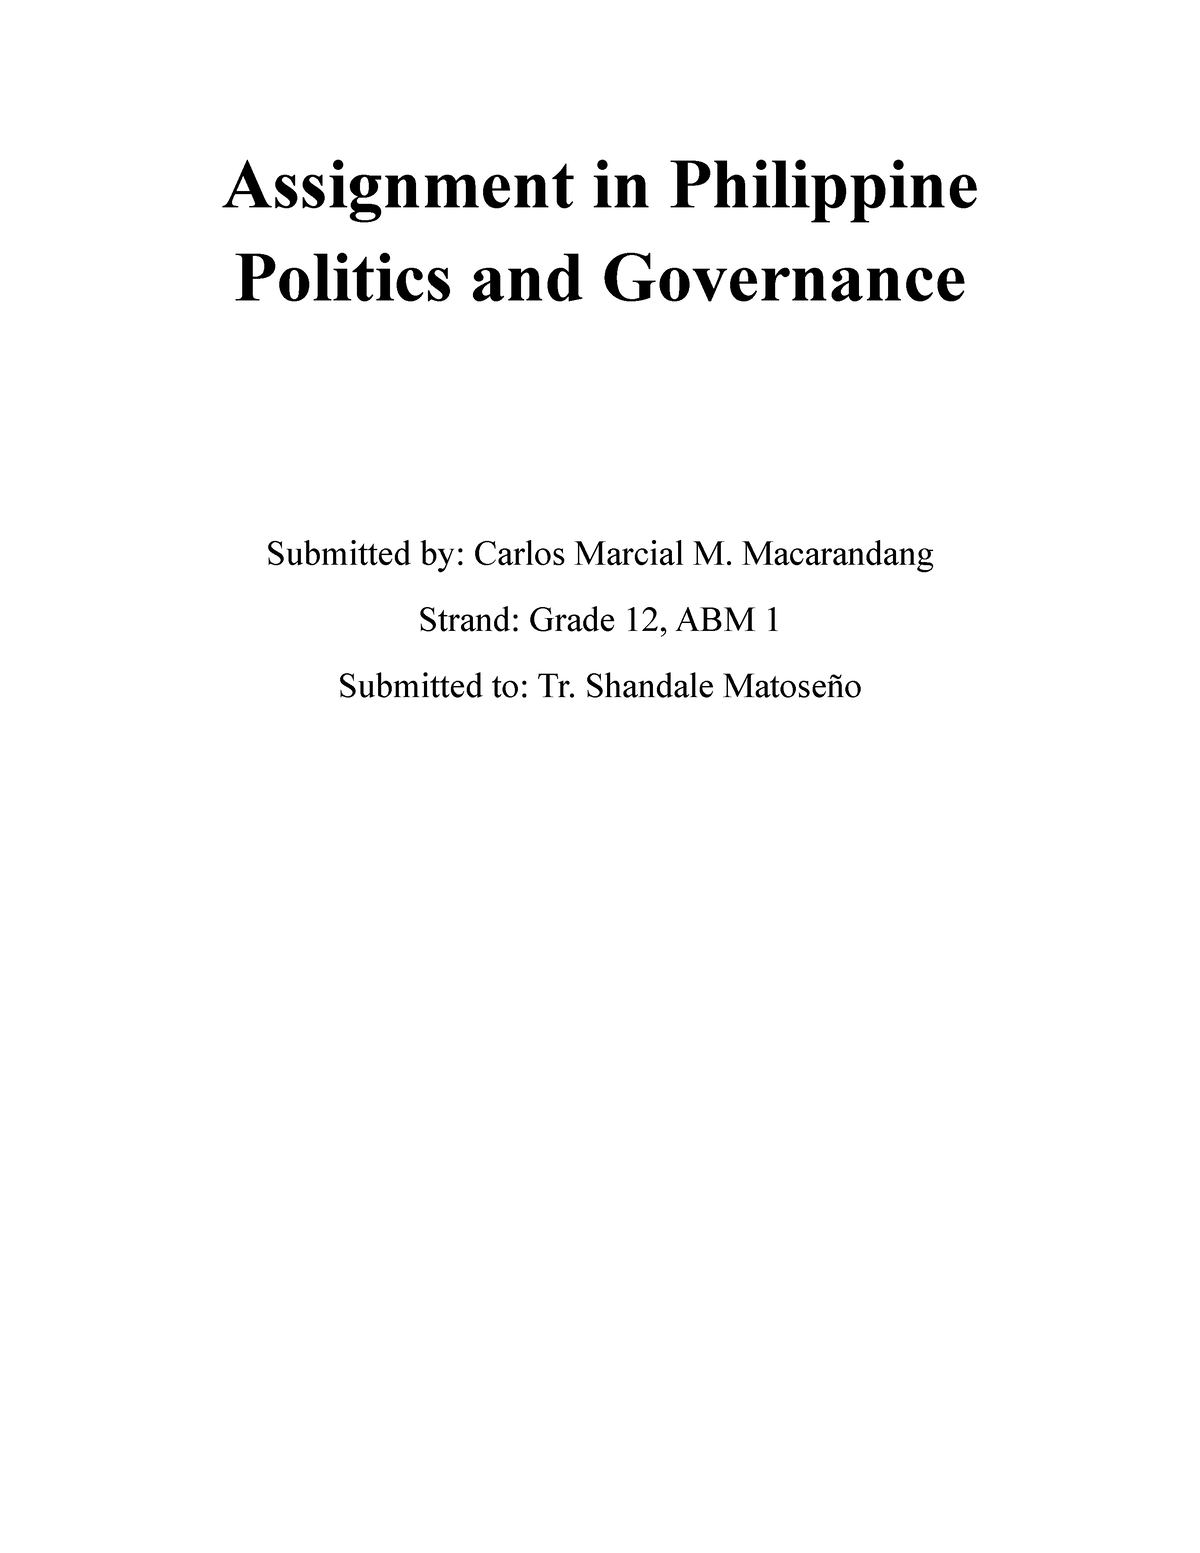 Assignment In Philippine Politics And Governance Assignment In Philippine Politics And 3869